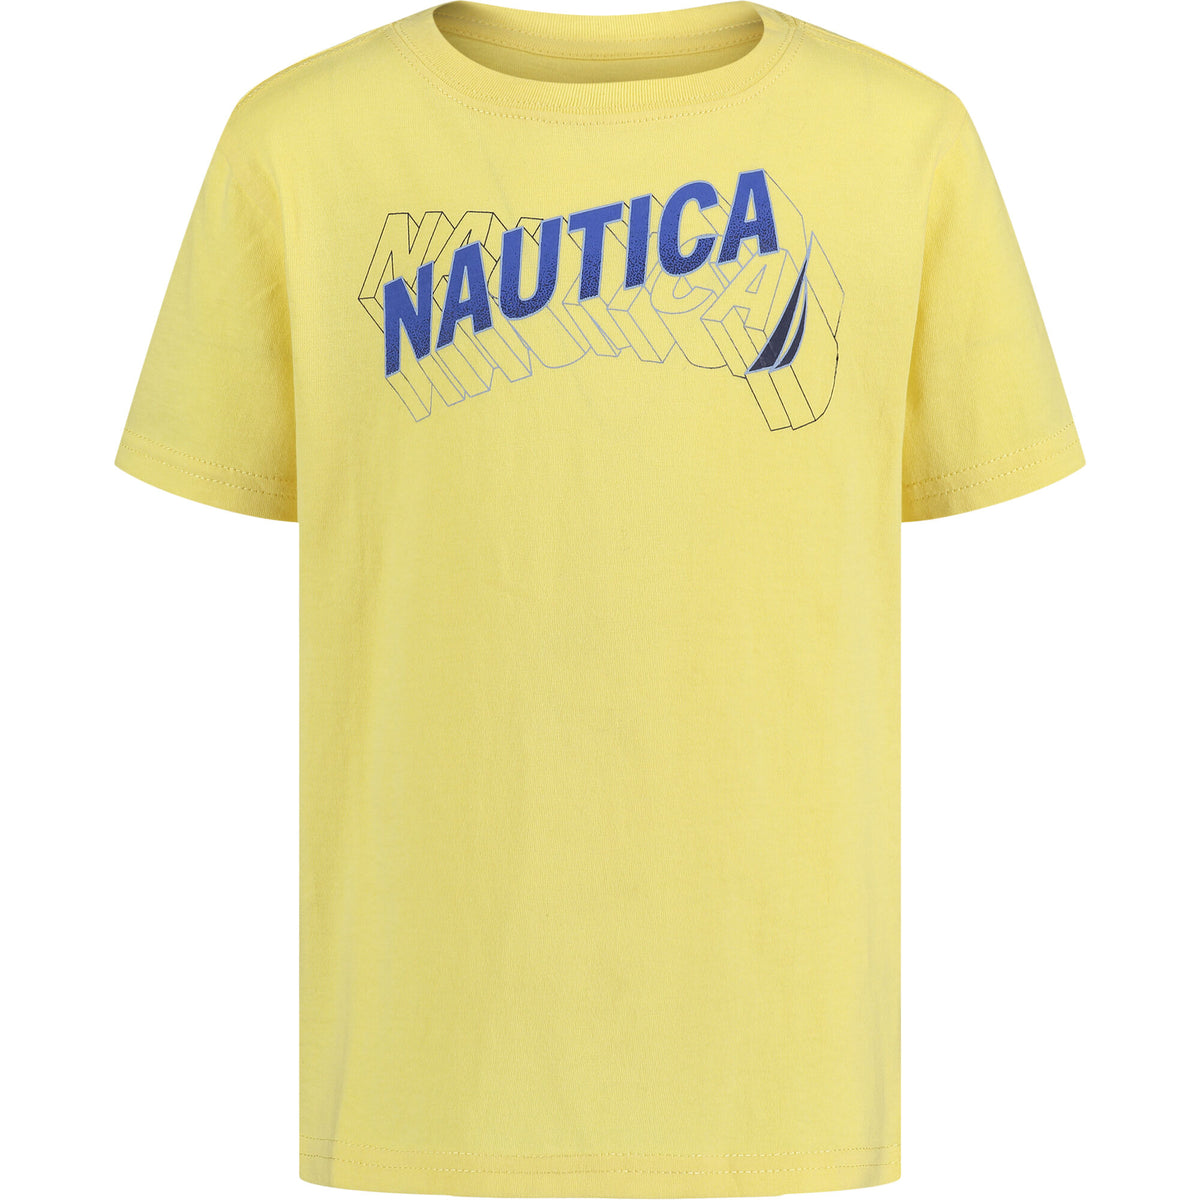 Nautica Toddler Boys' Dimensional Graphic T-Shirt (2T-4T) Cornsilk